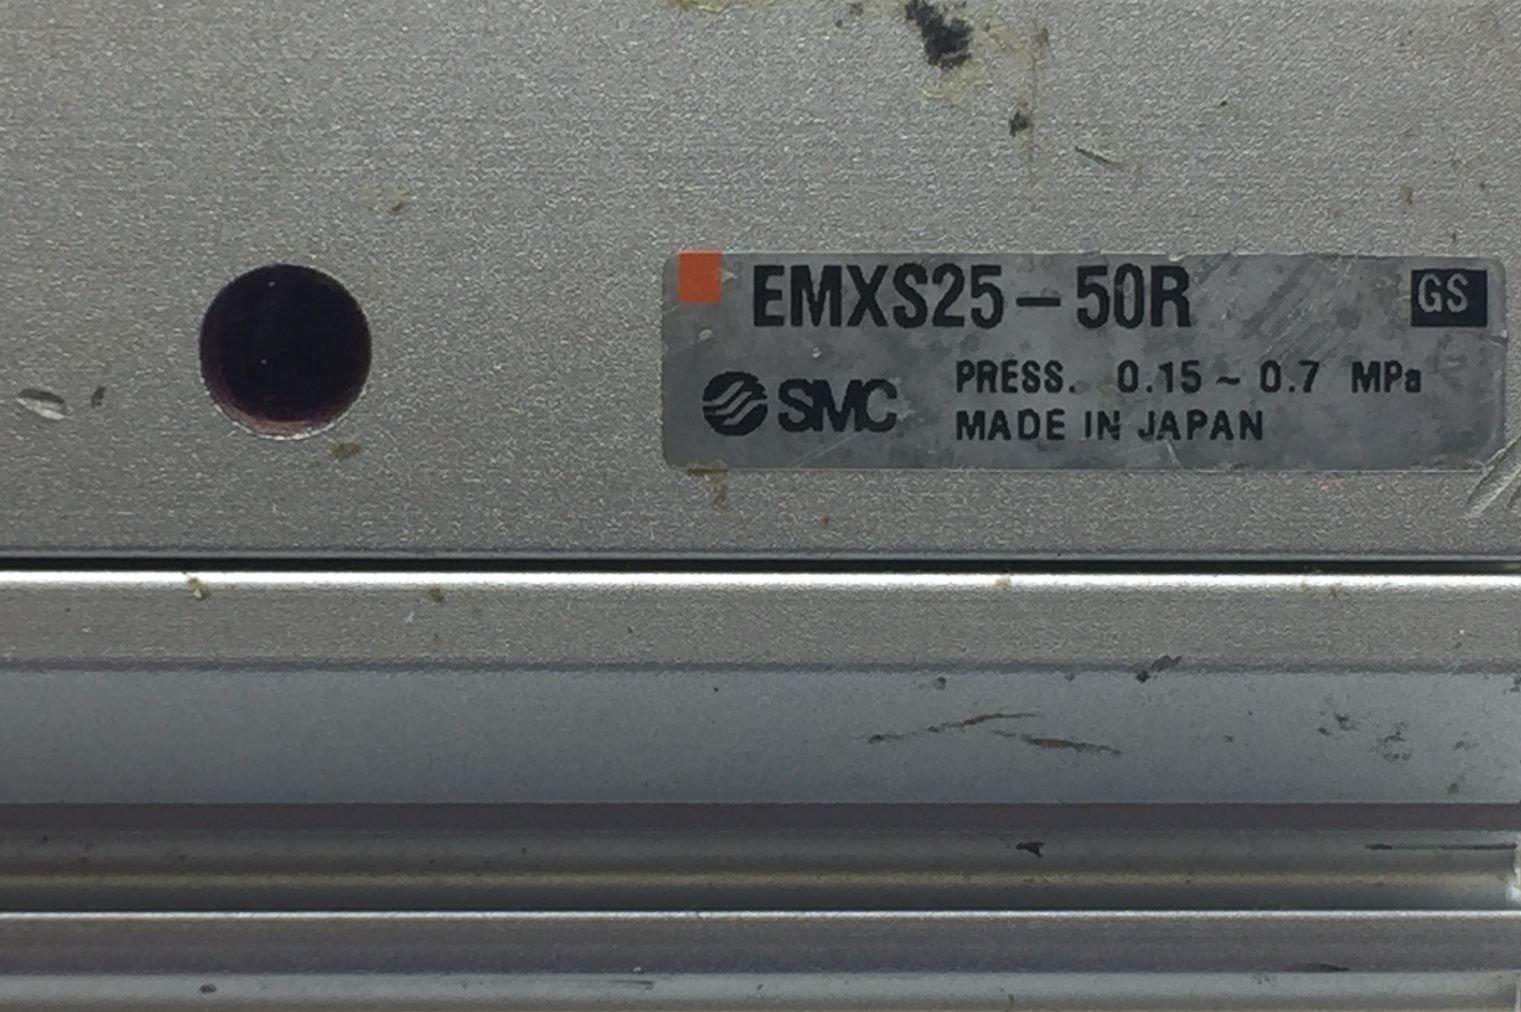  SMC EMXS25-50R BEARING LINEAR SLIDE 